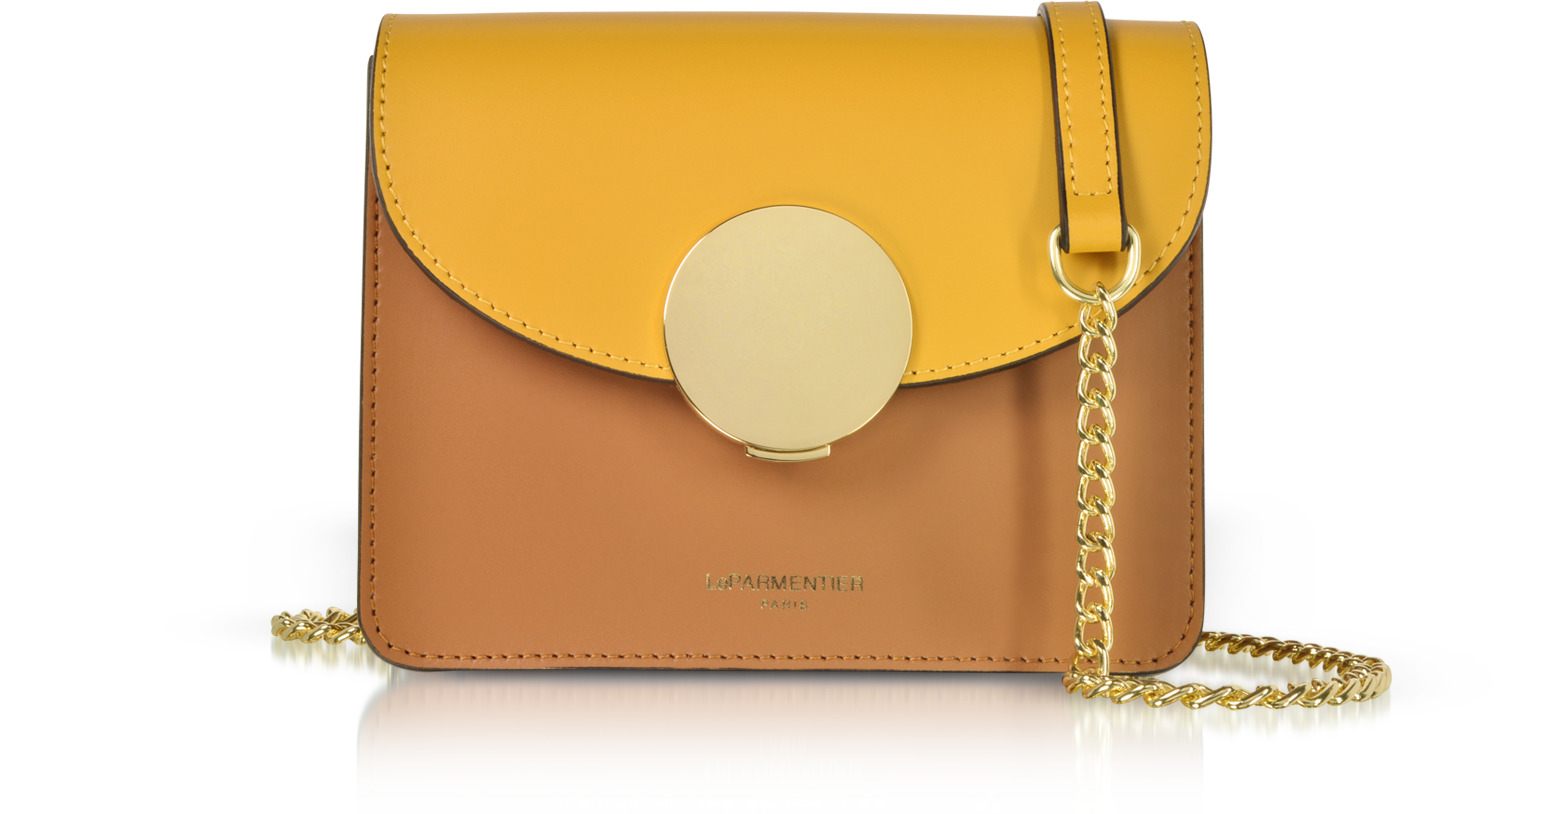 Mini Saffron Bag